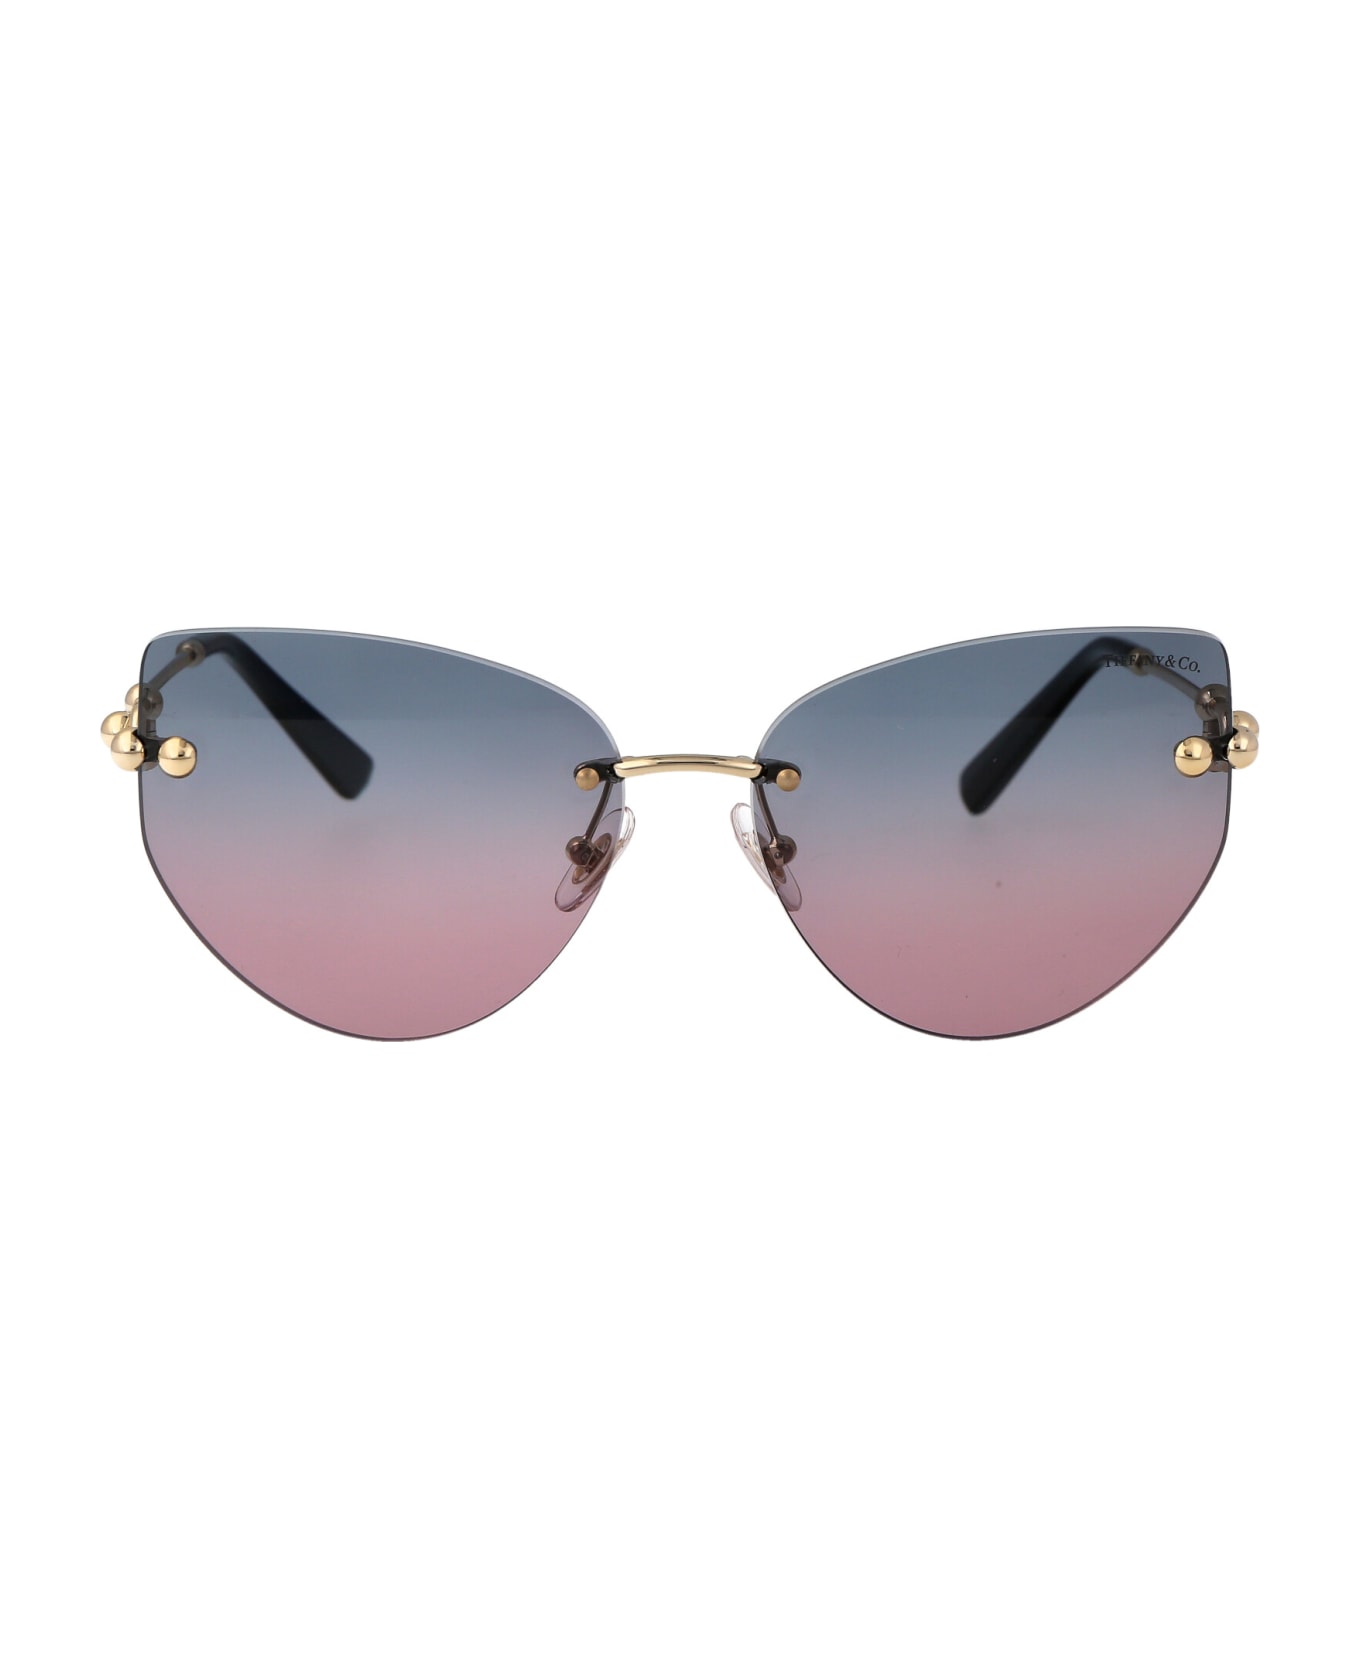 Tiffany & Co. 0tf3096 Sunglasses - 62030Q Pale Gold サングラス